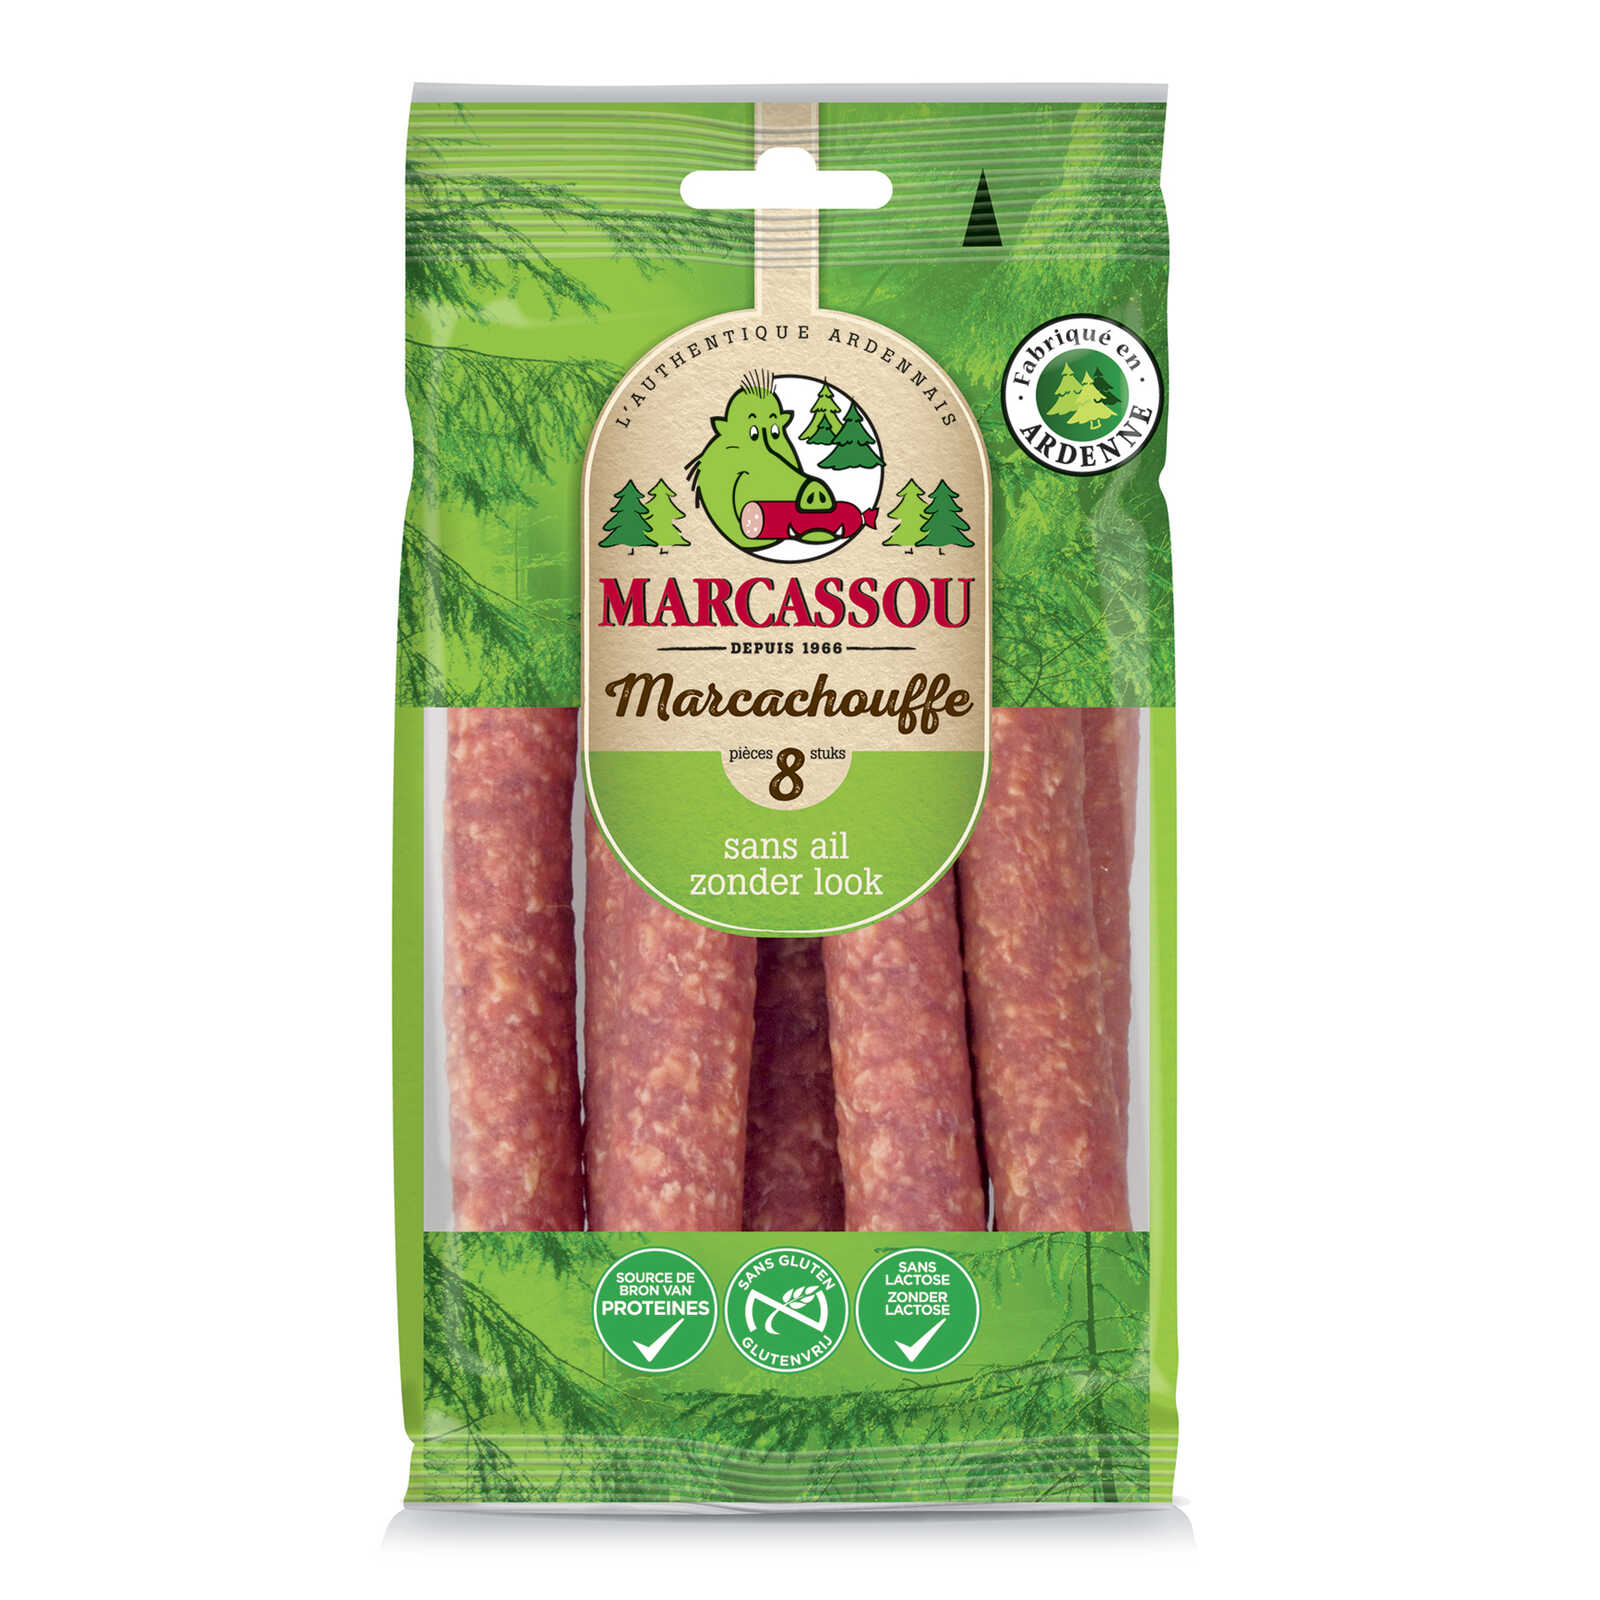 Marcassou-Marcachouffe